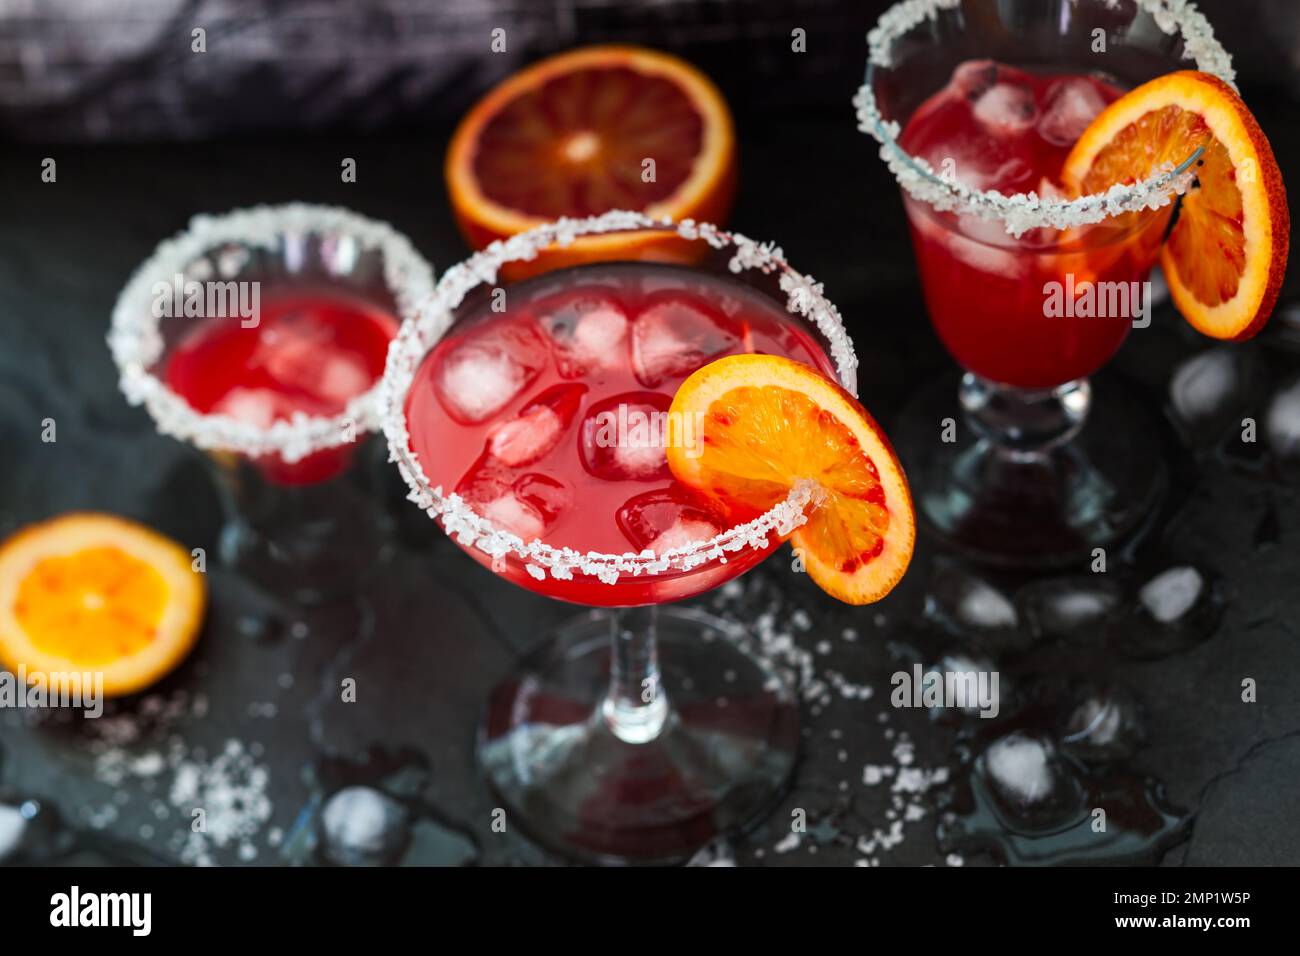 Blood Orange Margarita in glass with salted rim Stock Photo